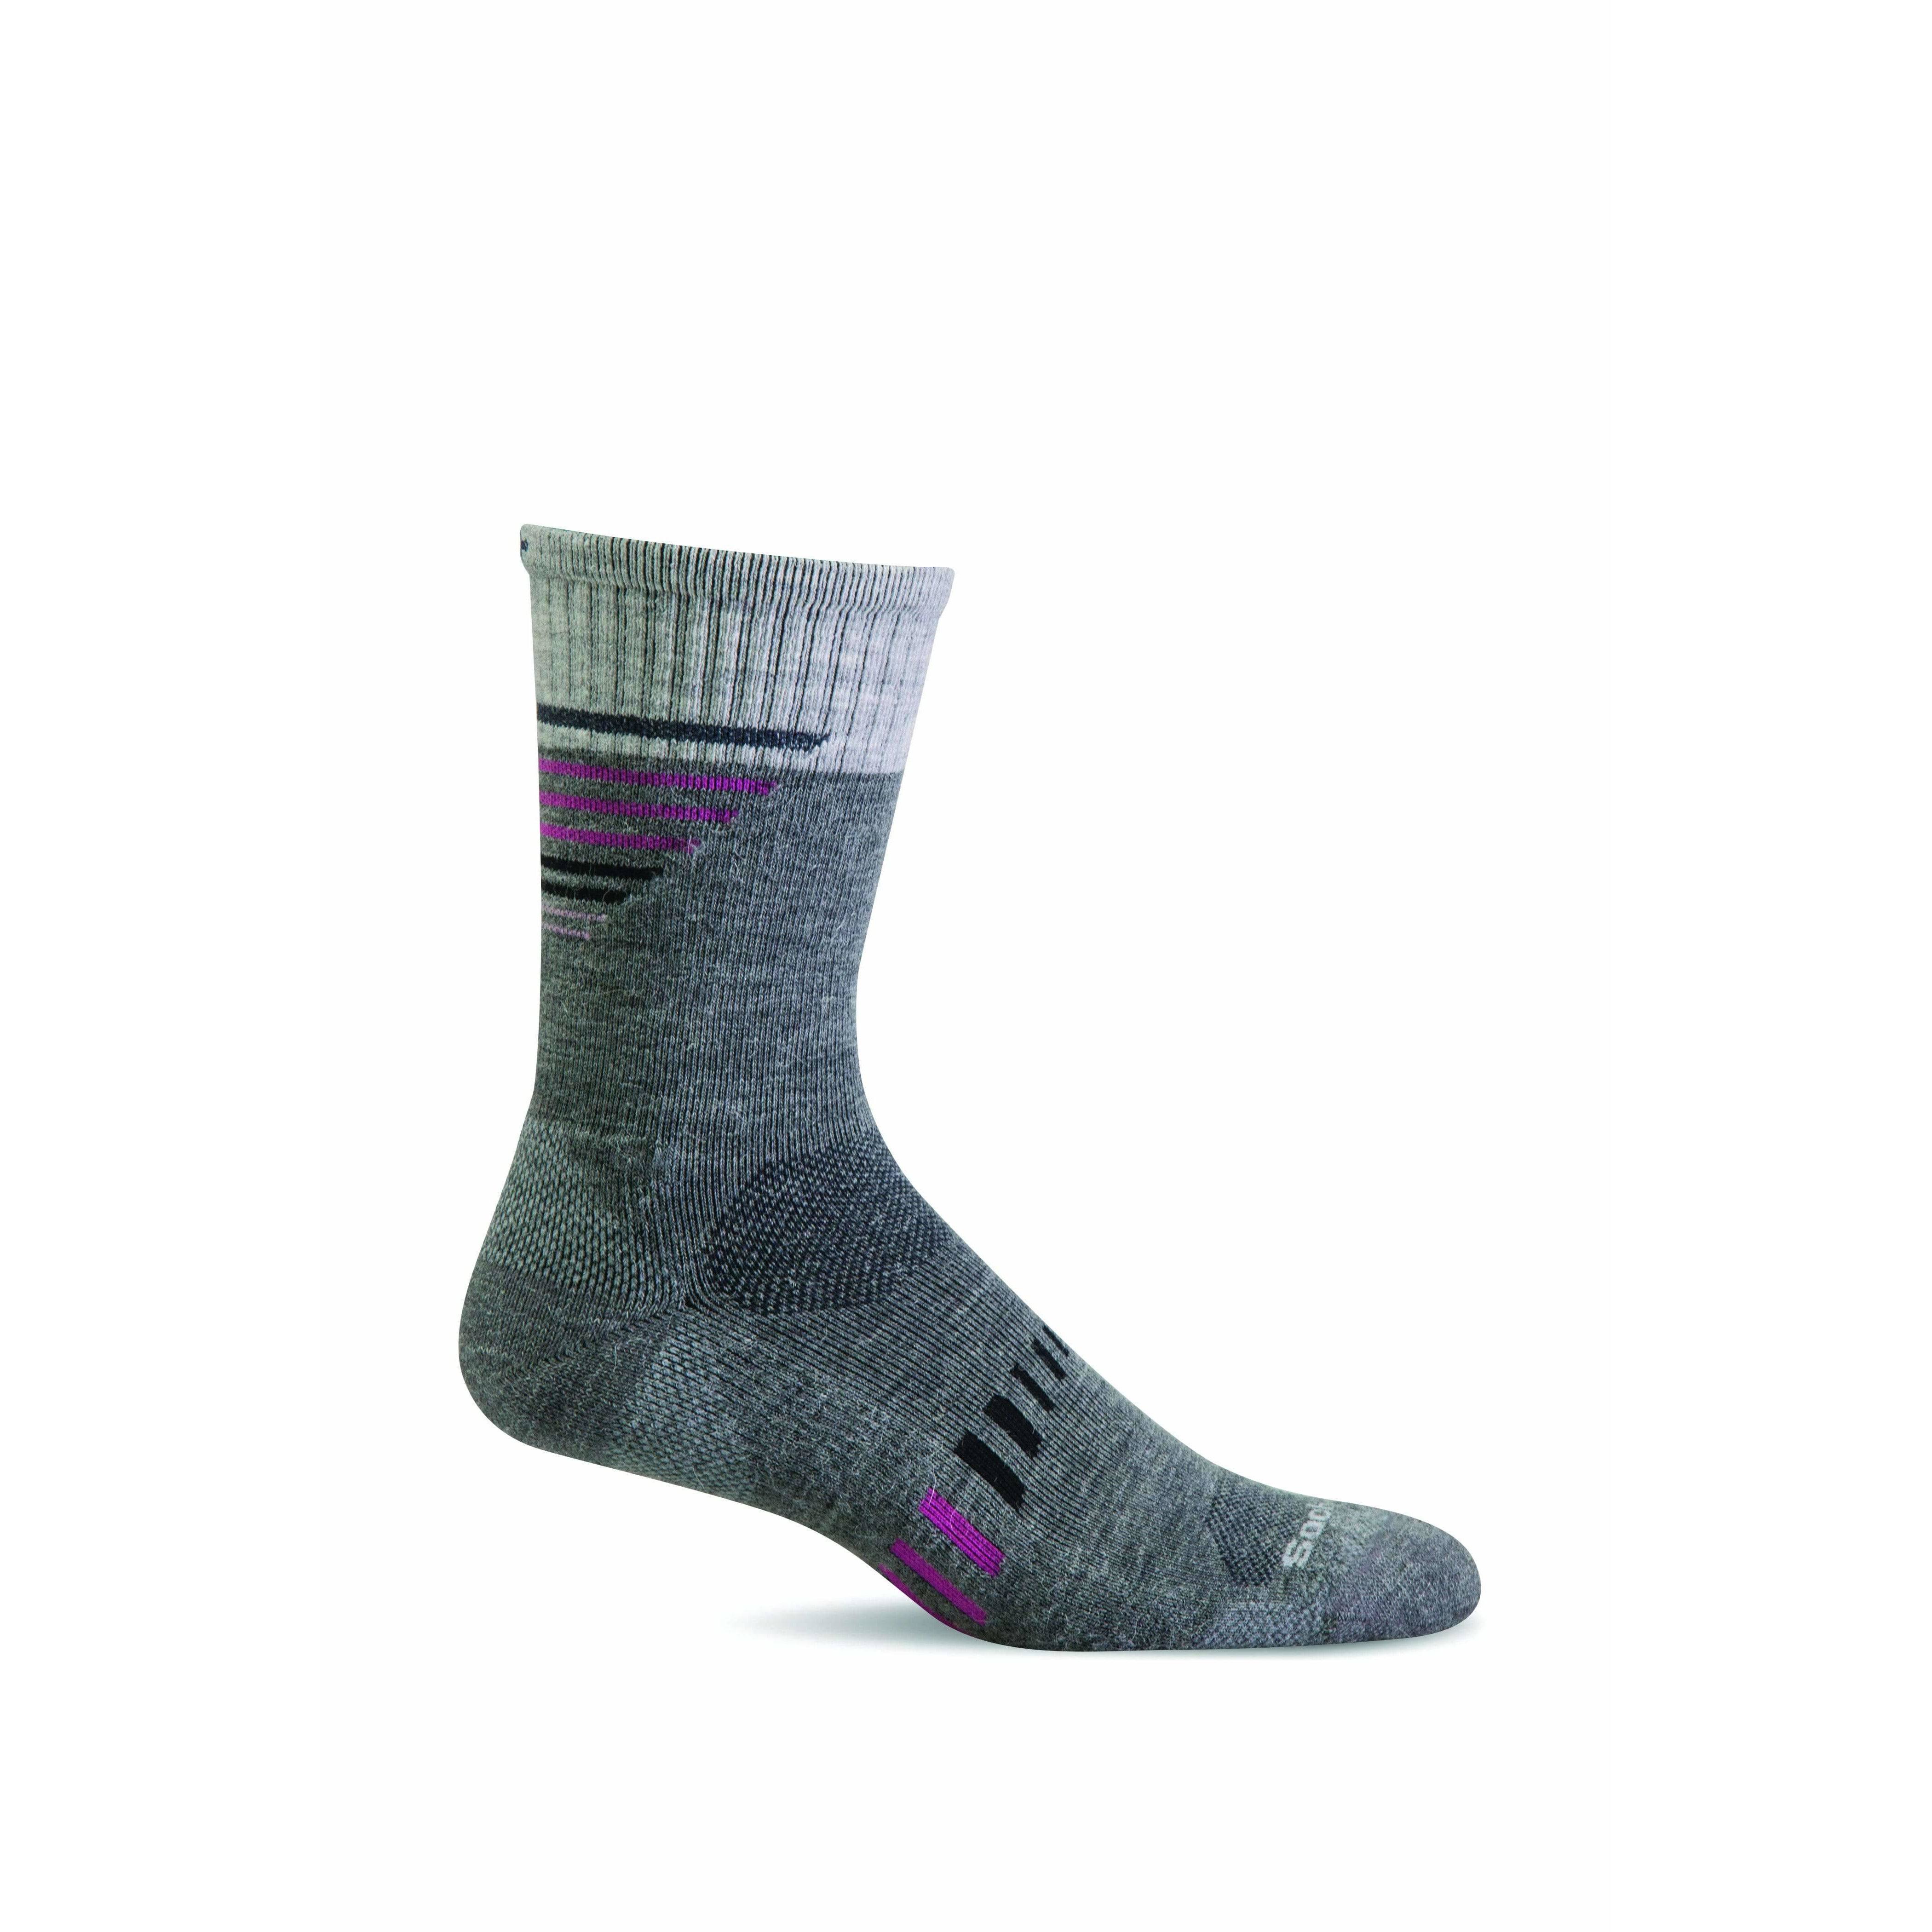 Sockwell Mens Elevation Graduated Compression Socks - Gray, Medium and Large